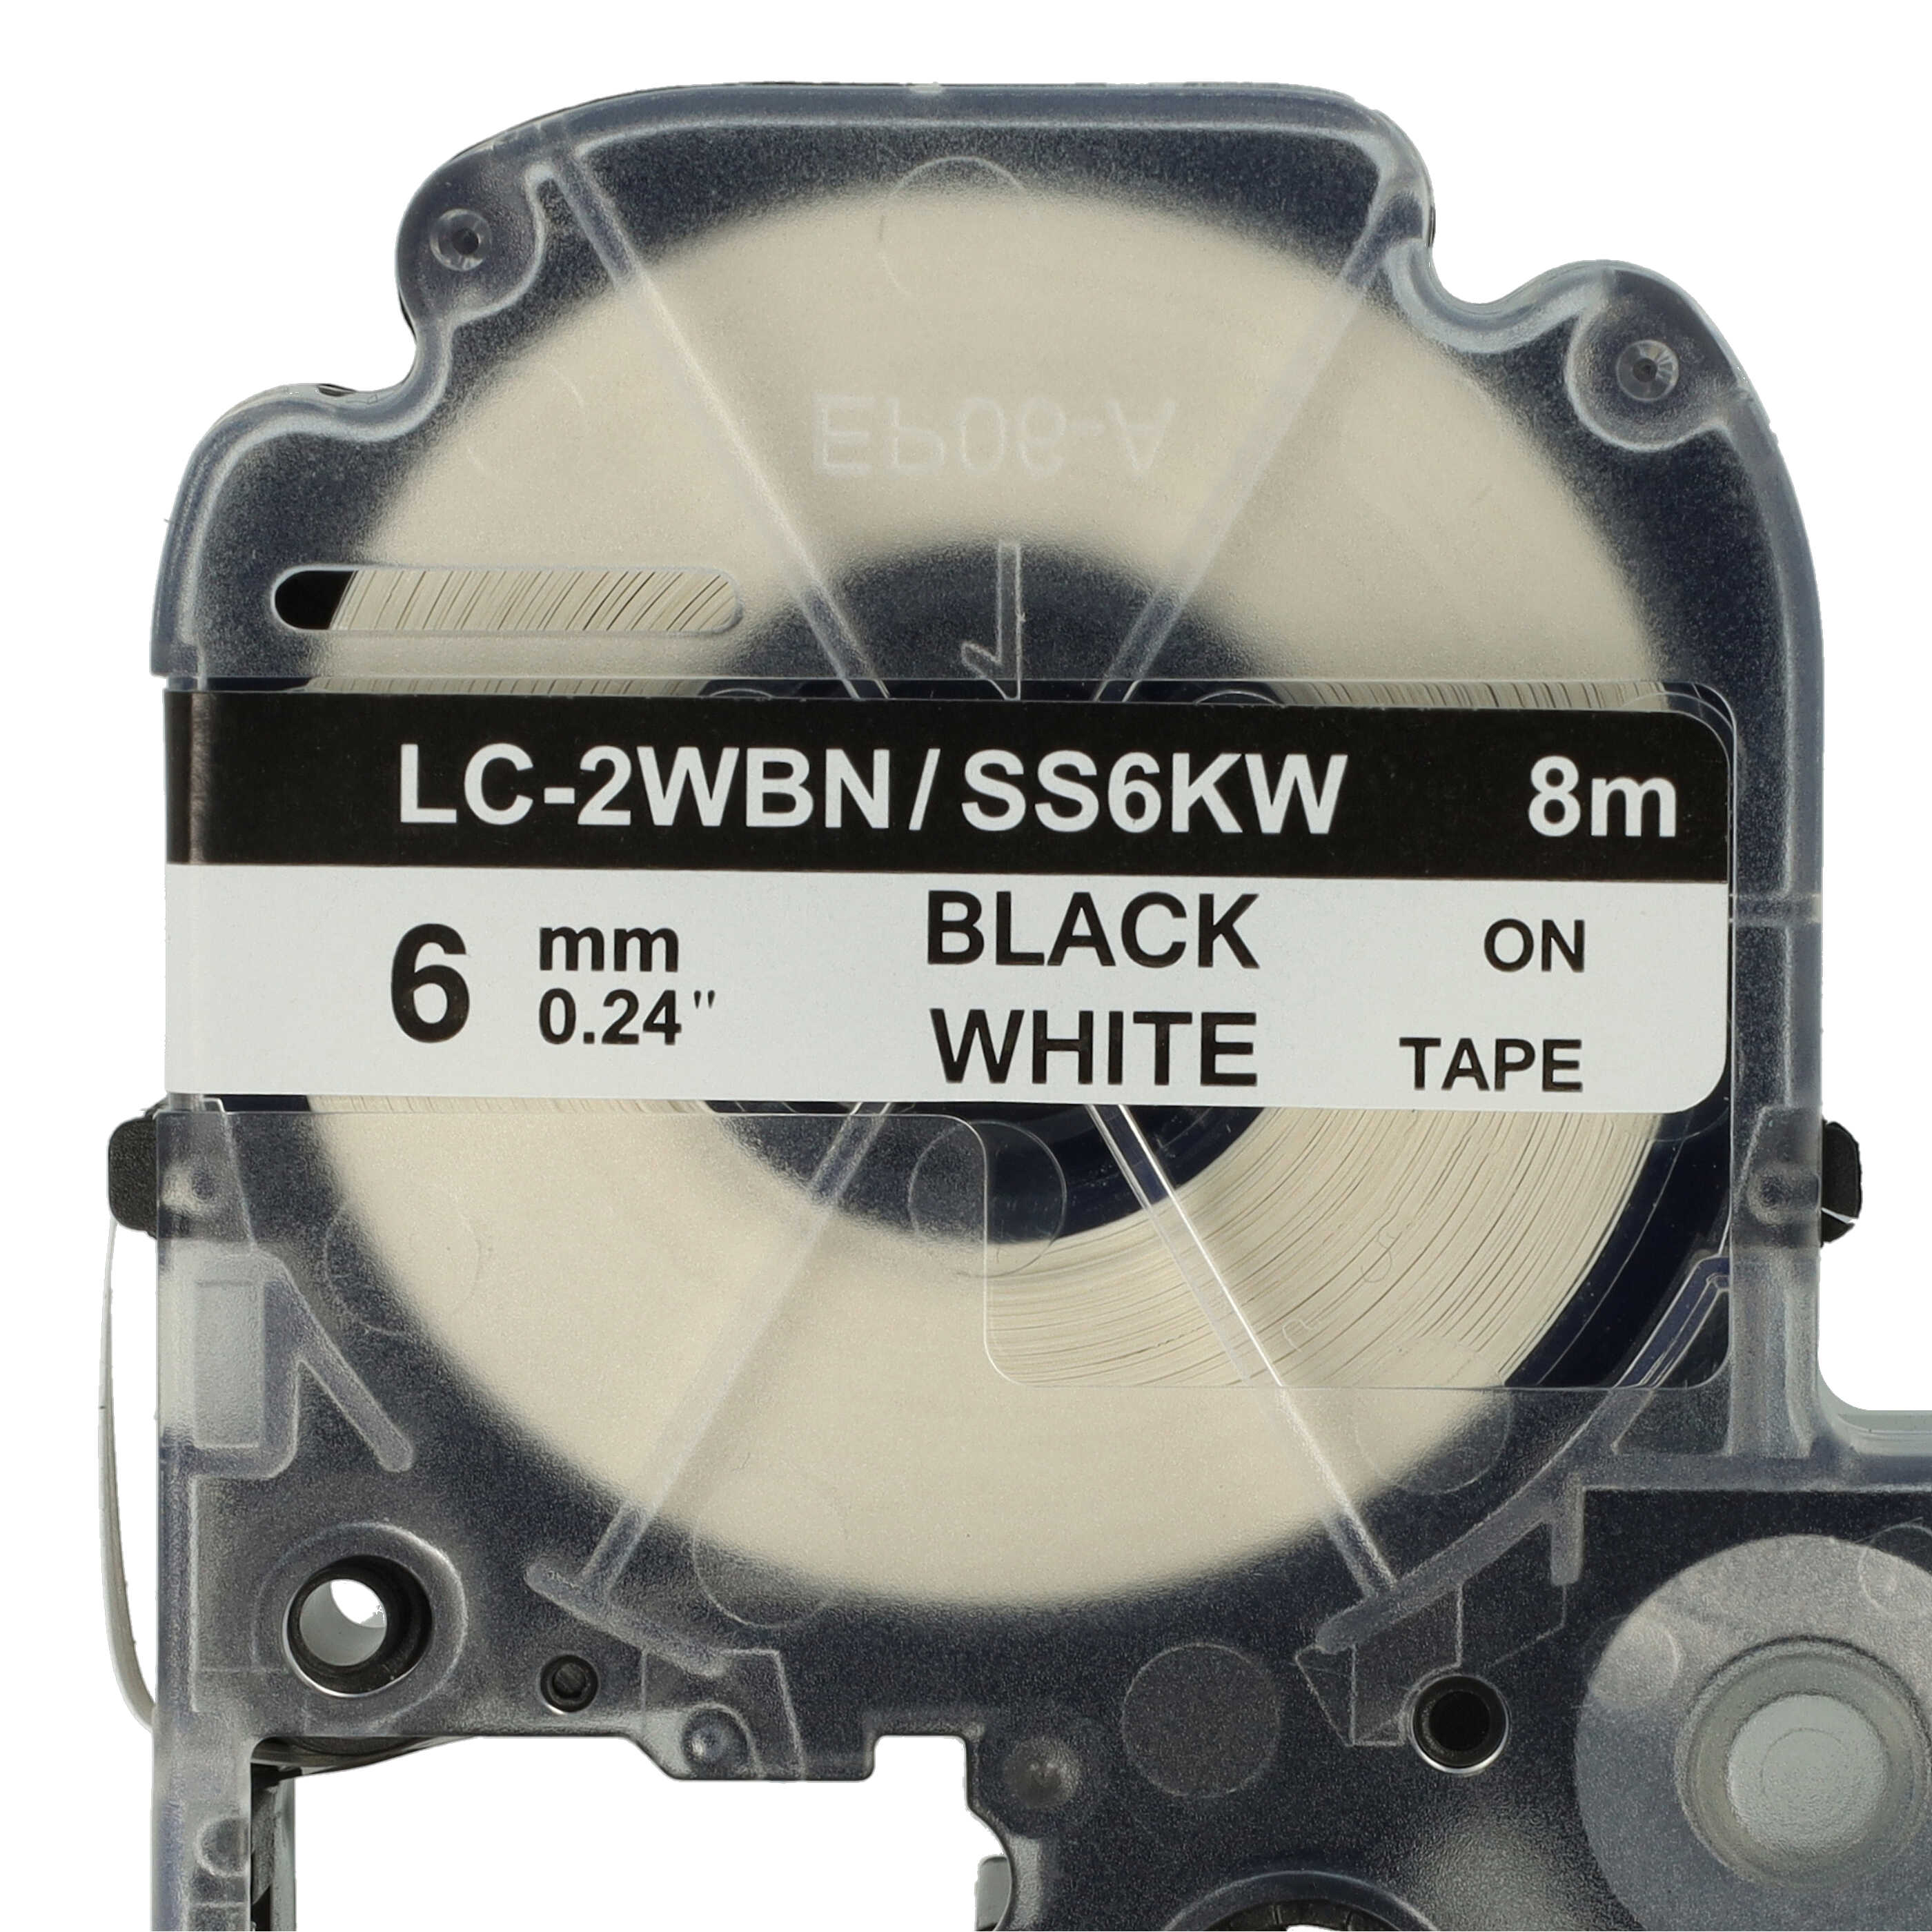 10x Casete cinta escritura reemplaza Epson LC-2WBN Negro su Blanco